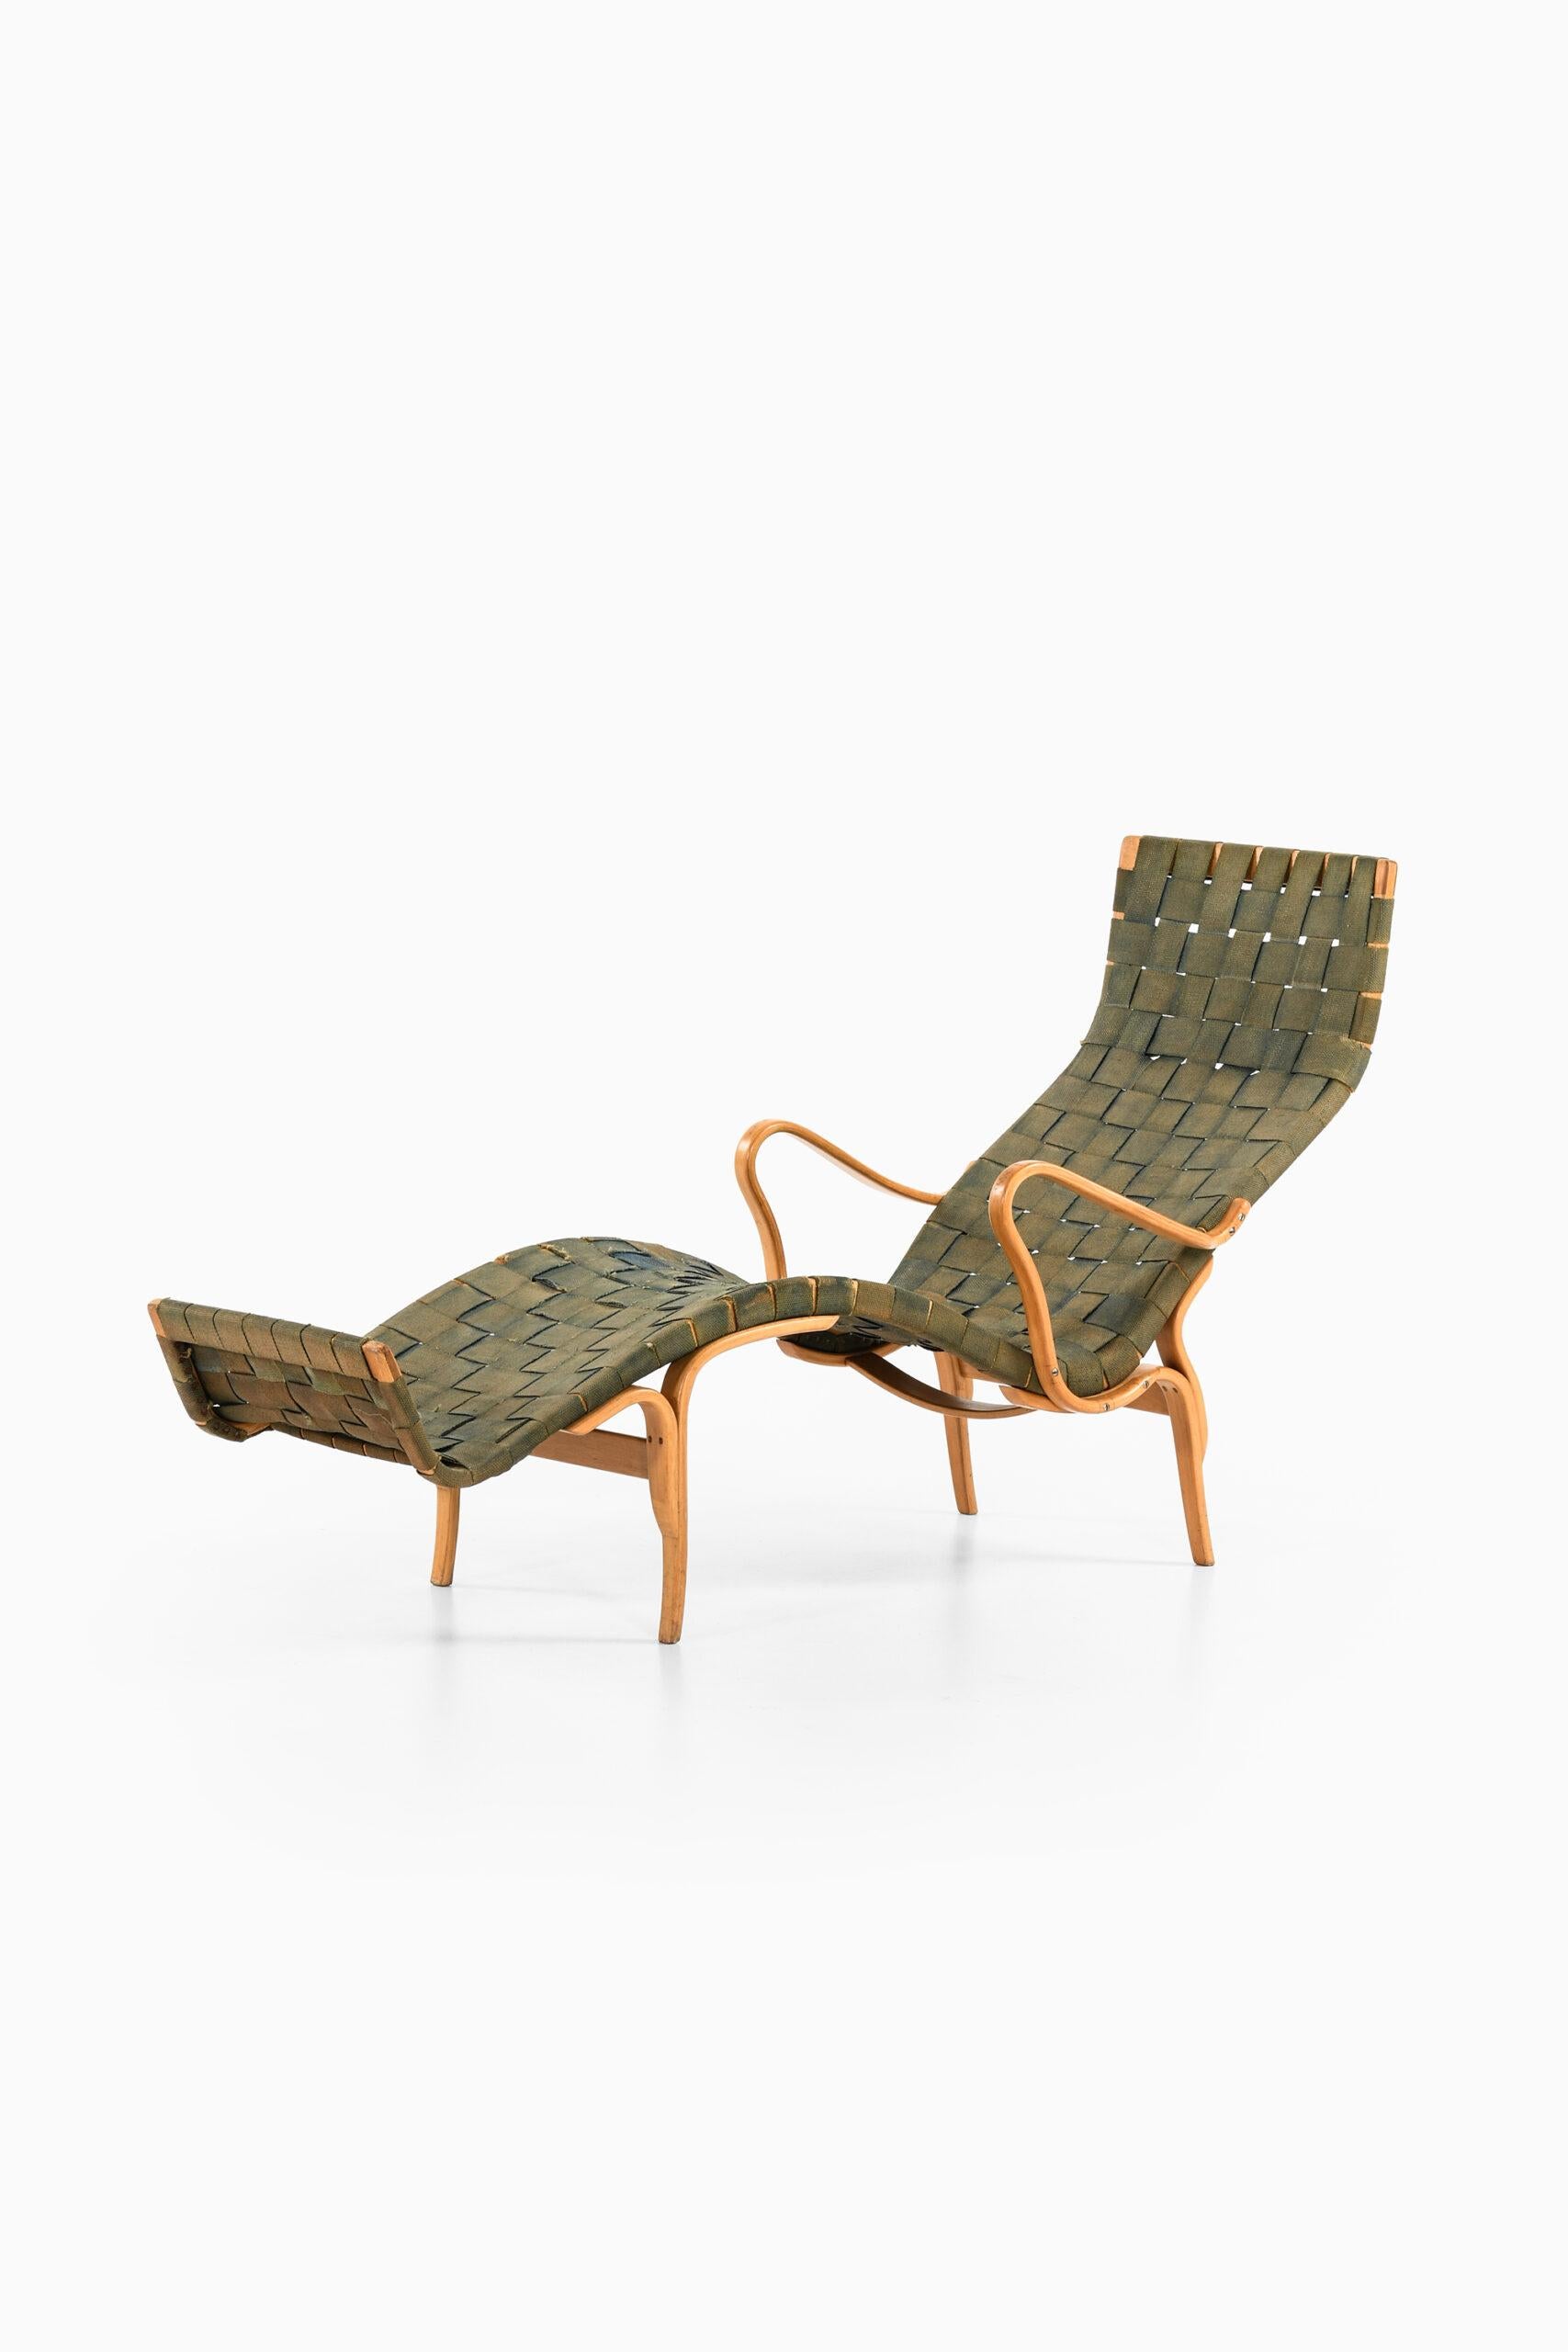 Sheepskin Bruno Mathsson Lounge Chair Model Pernilla 3 / T-108 by Karl Mathsson in Värnamo For Sale